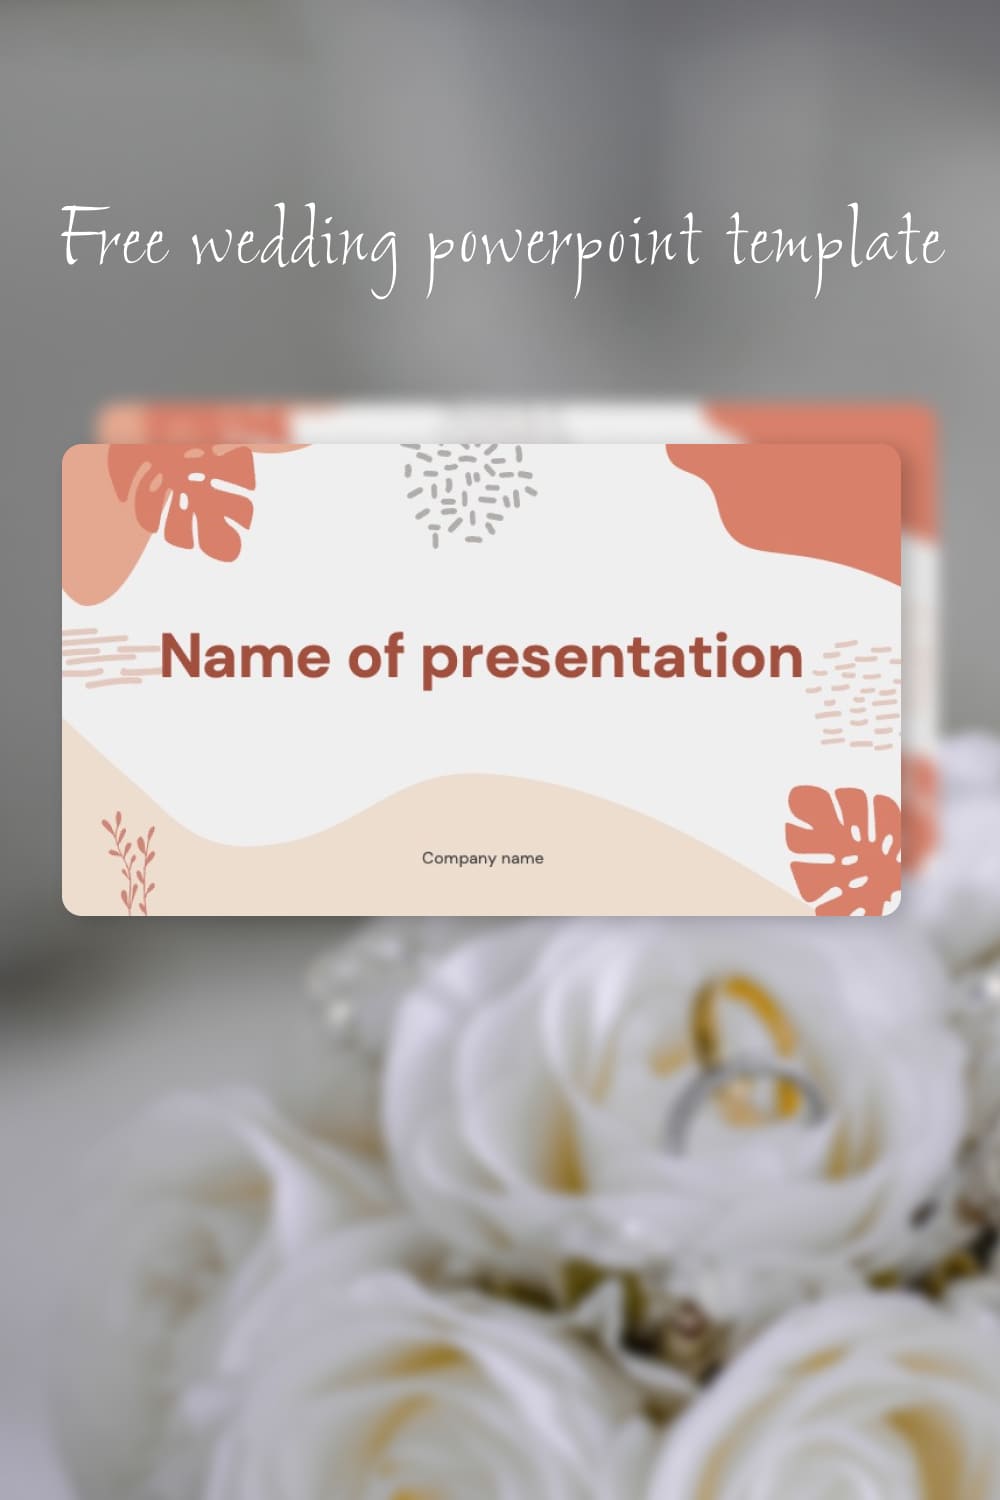 Pinterest Free Wedding Powerpoint Template.